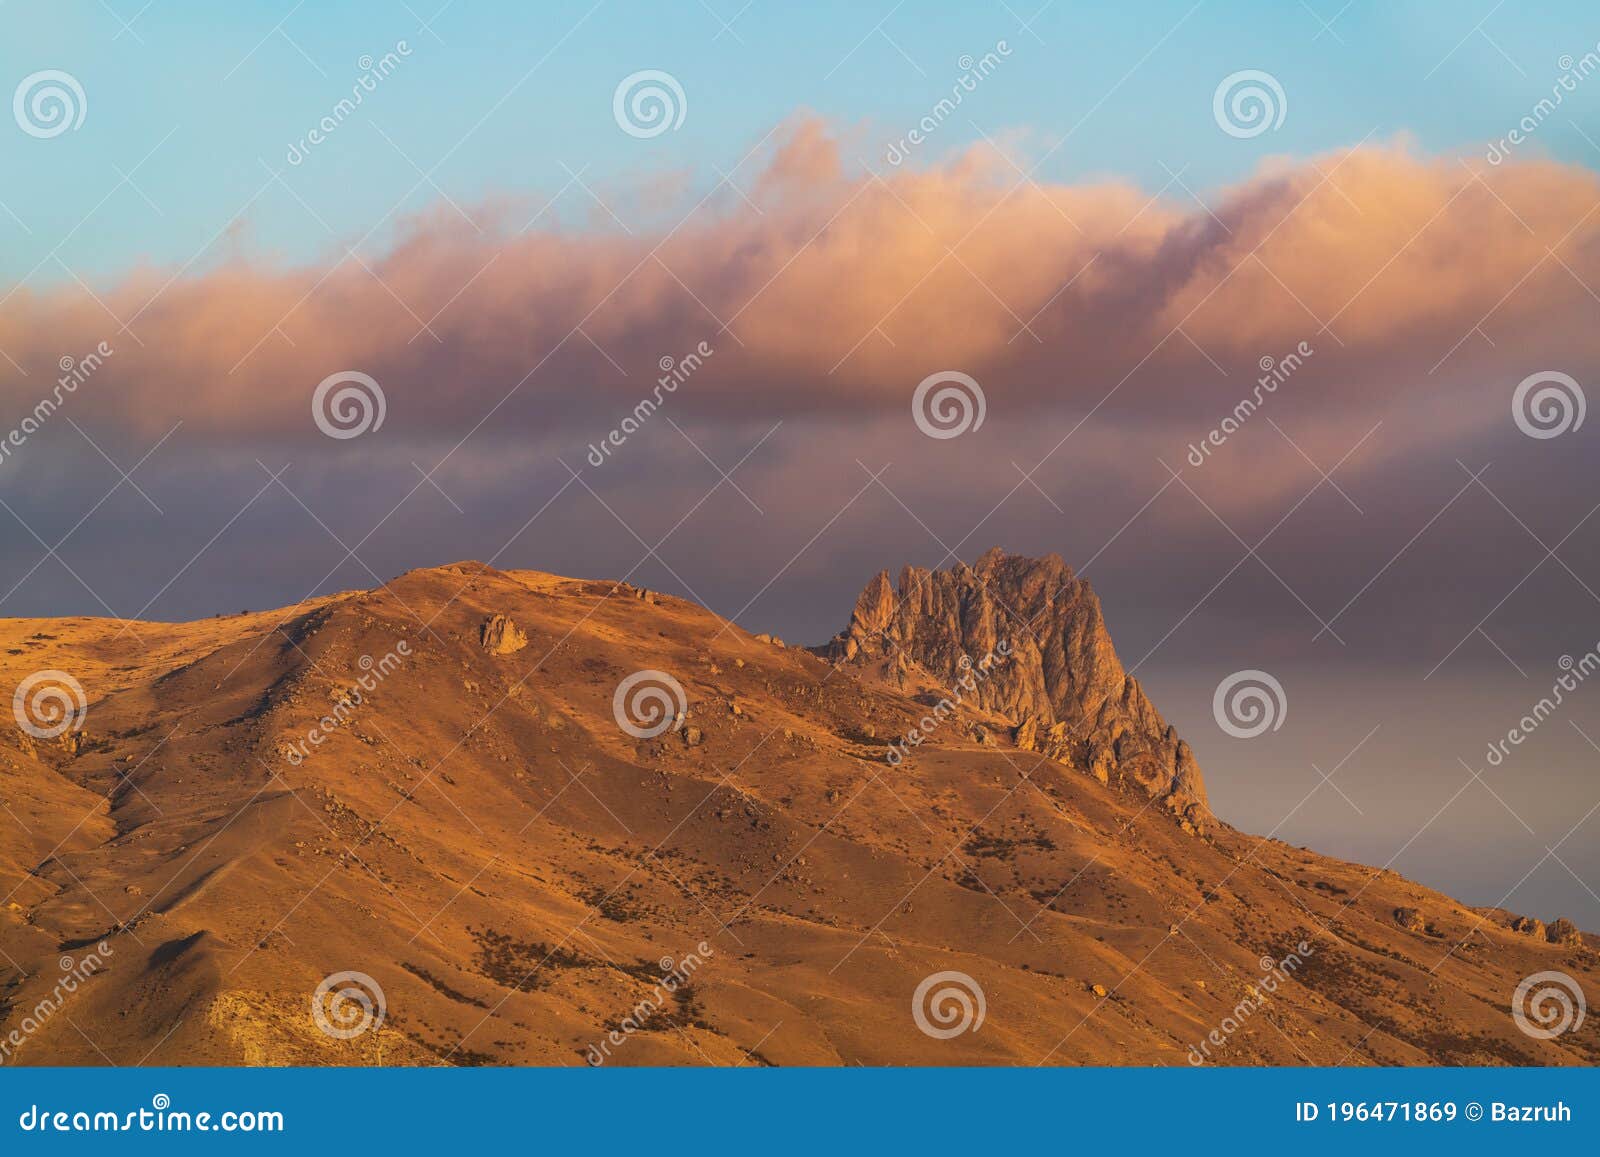 rocky peak of holy mountain beshbarmag located in azerbaijan